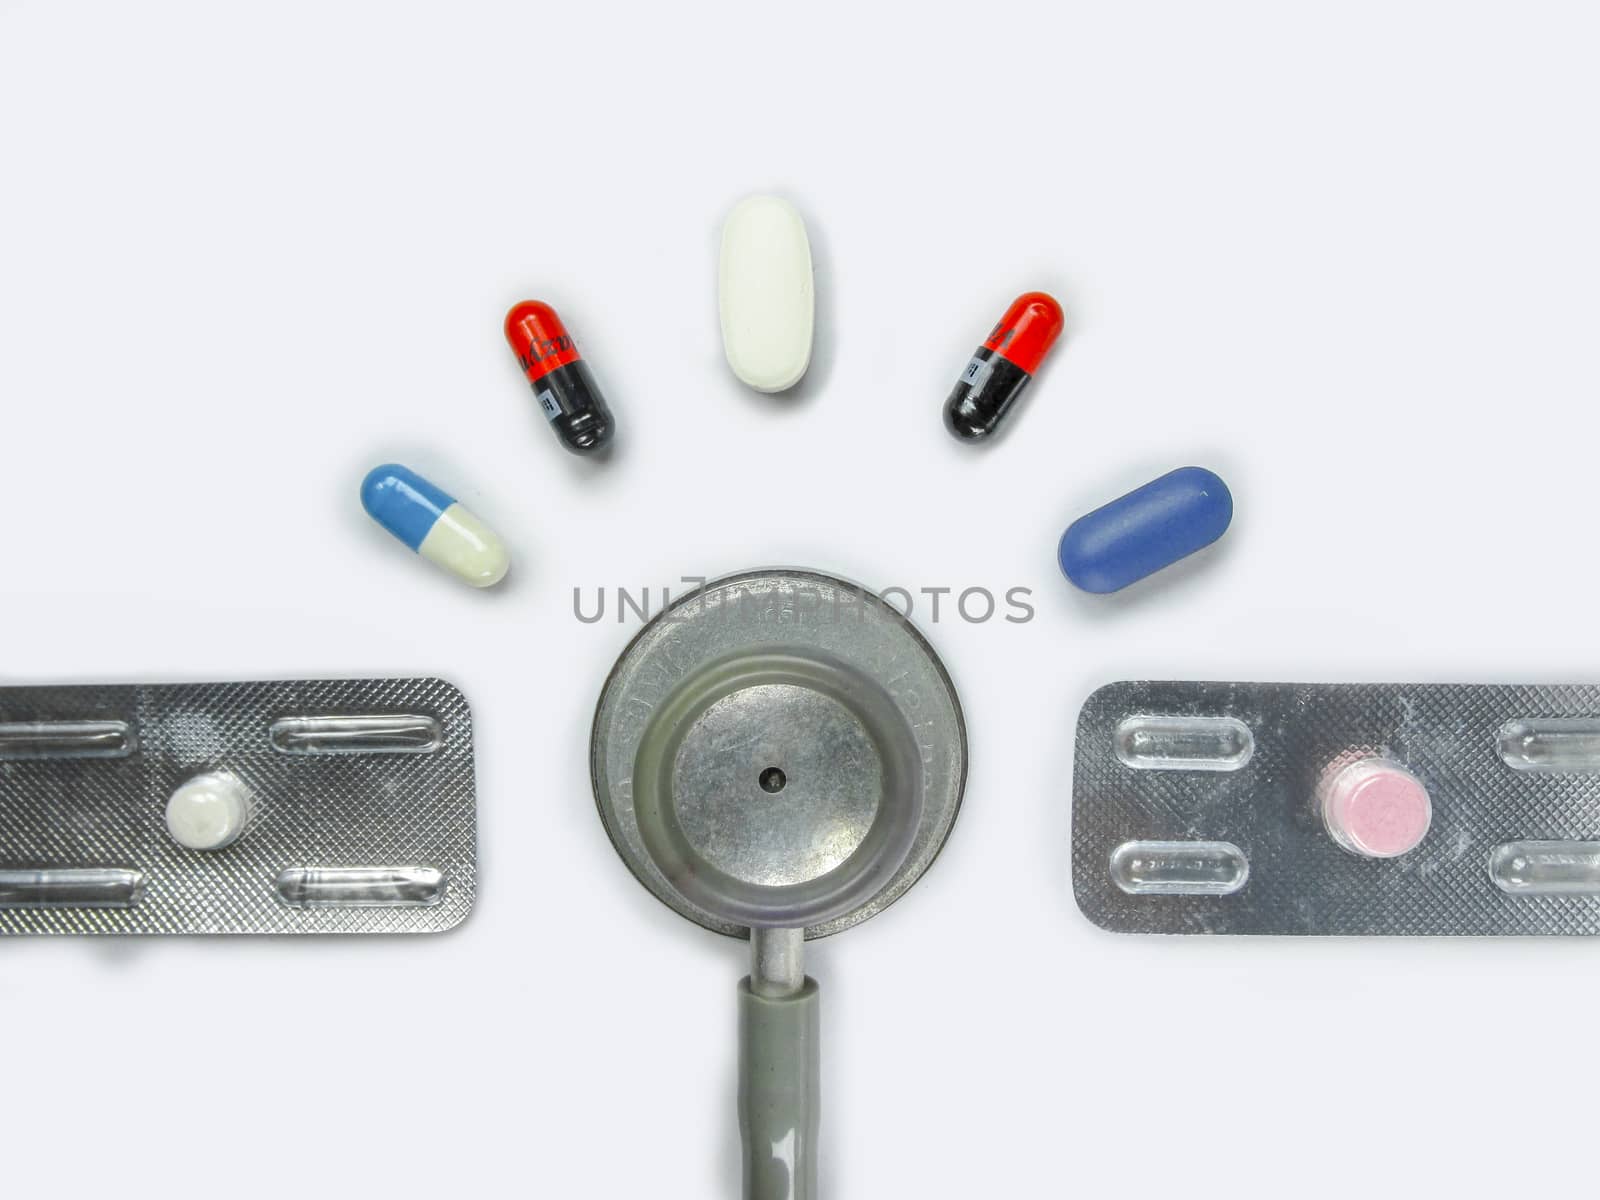 Stethoscope on white,report by drpgayen